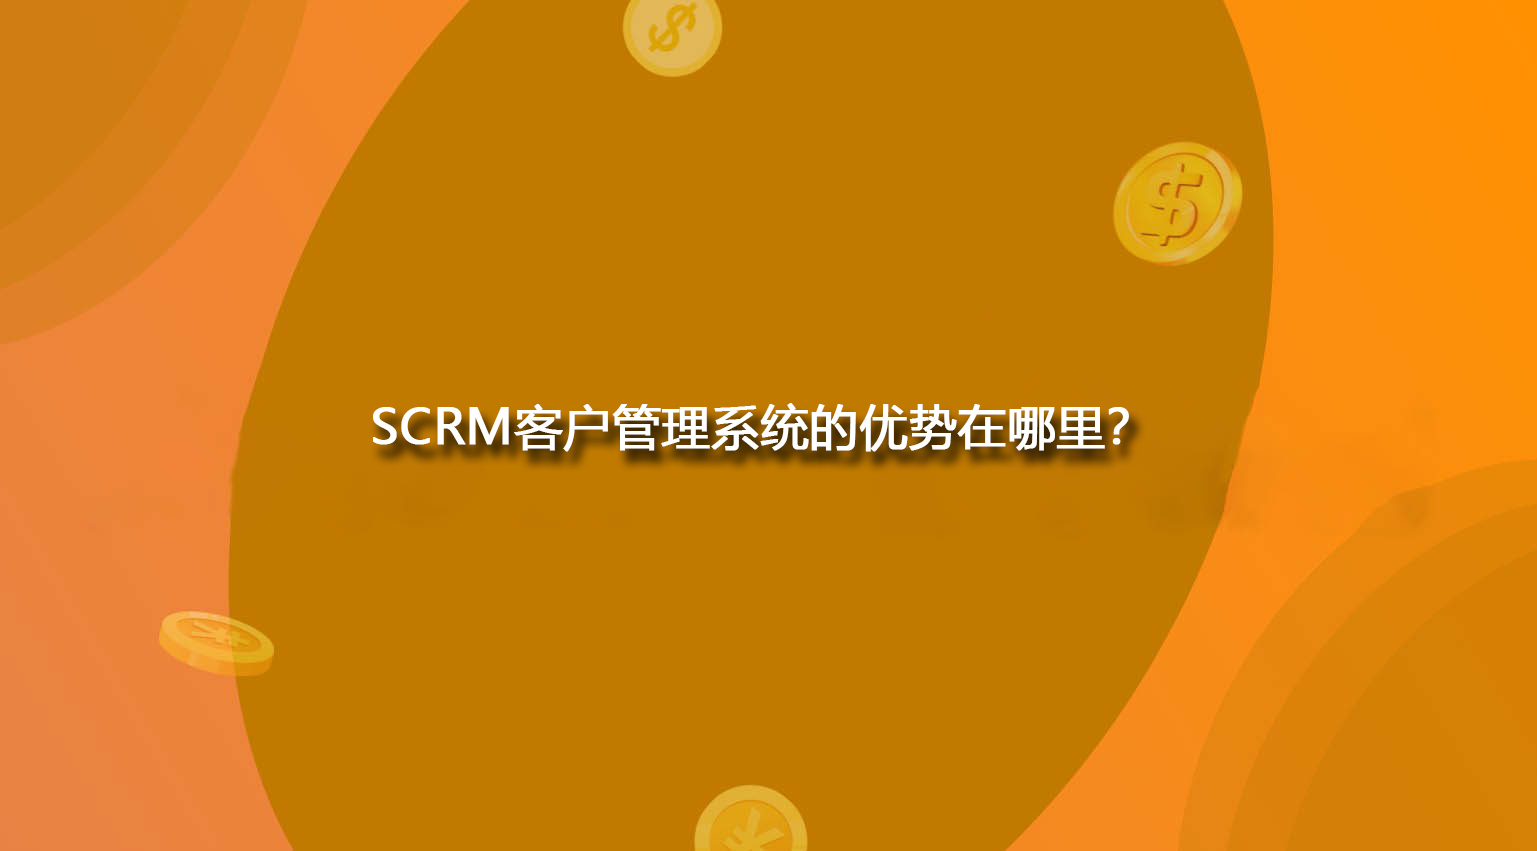 SCRM客户管理系统的优势在哪里？